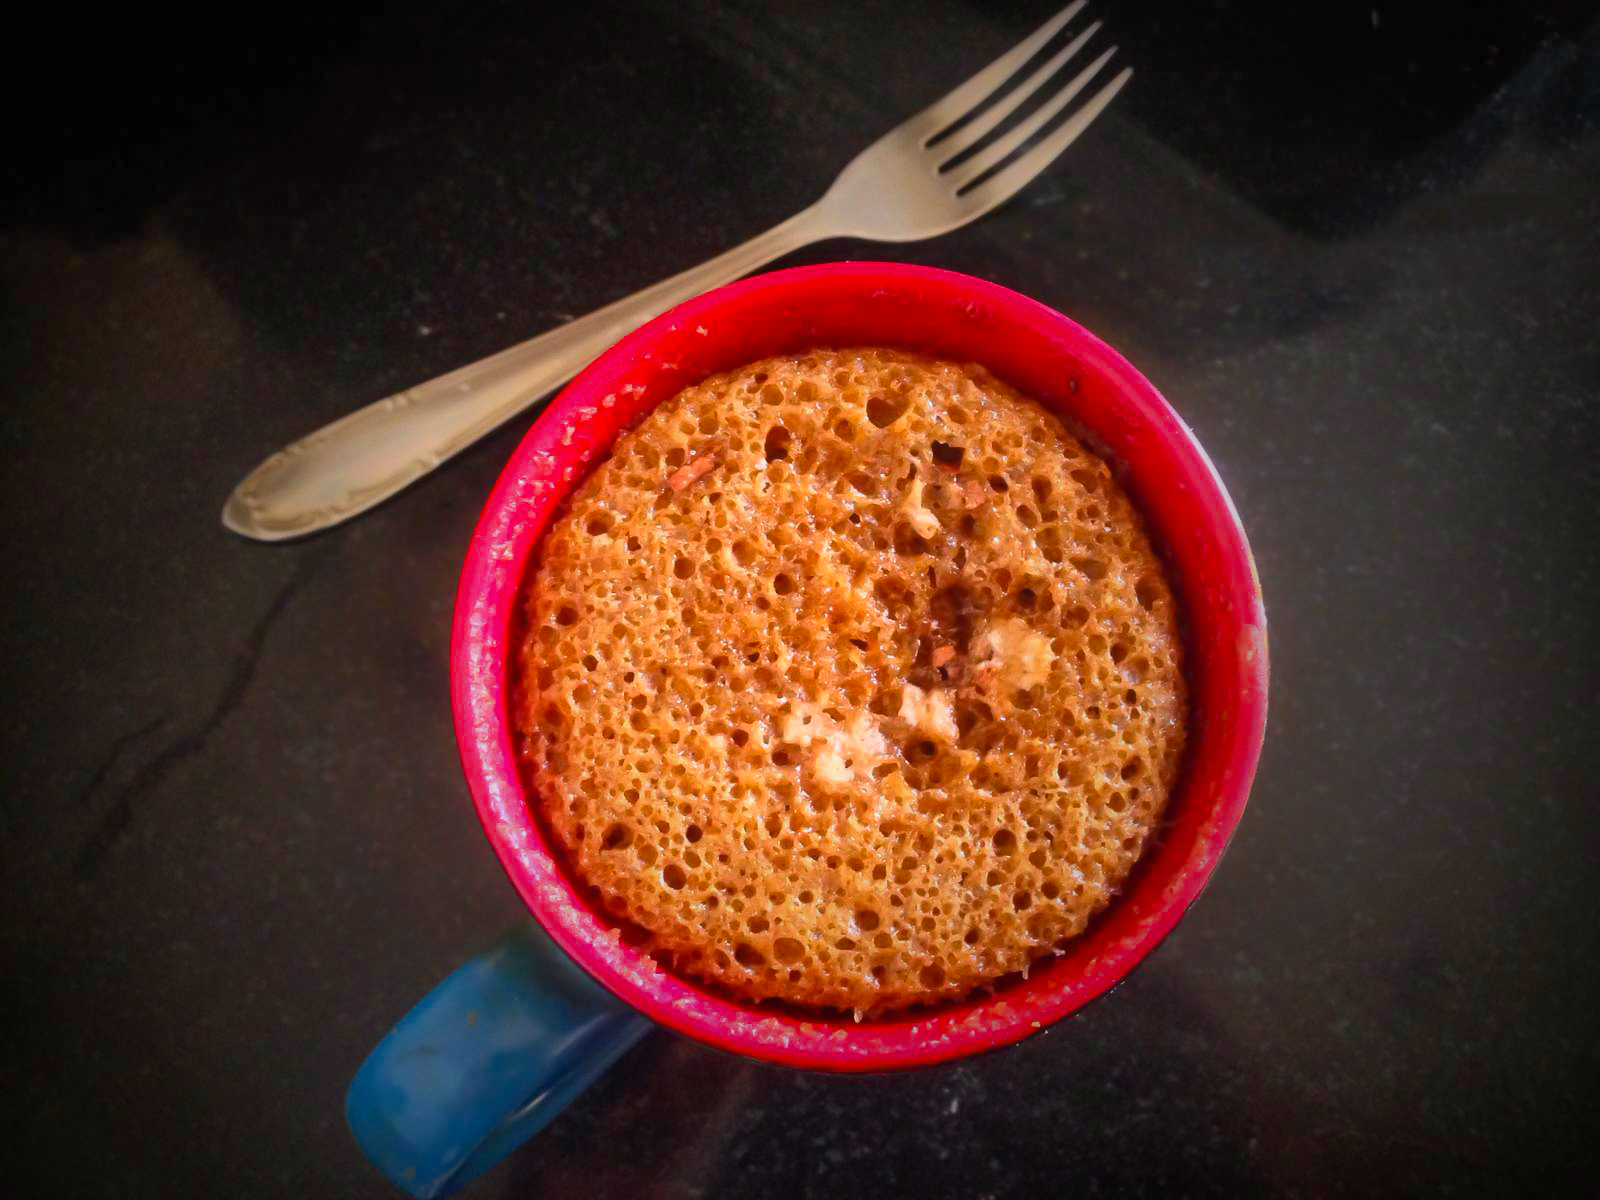 https://www.archanaskitchen.com/images/archanaskitchen/1-Author/Richa/2min_Eggless_Microwave_Chocolate_Mug_Cake__Instant_Mug_Cake.jpg